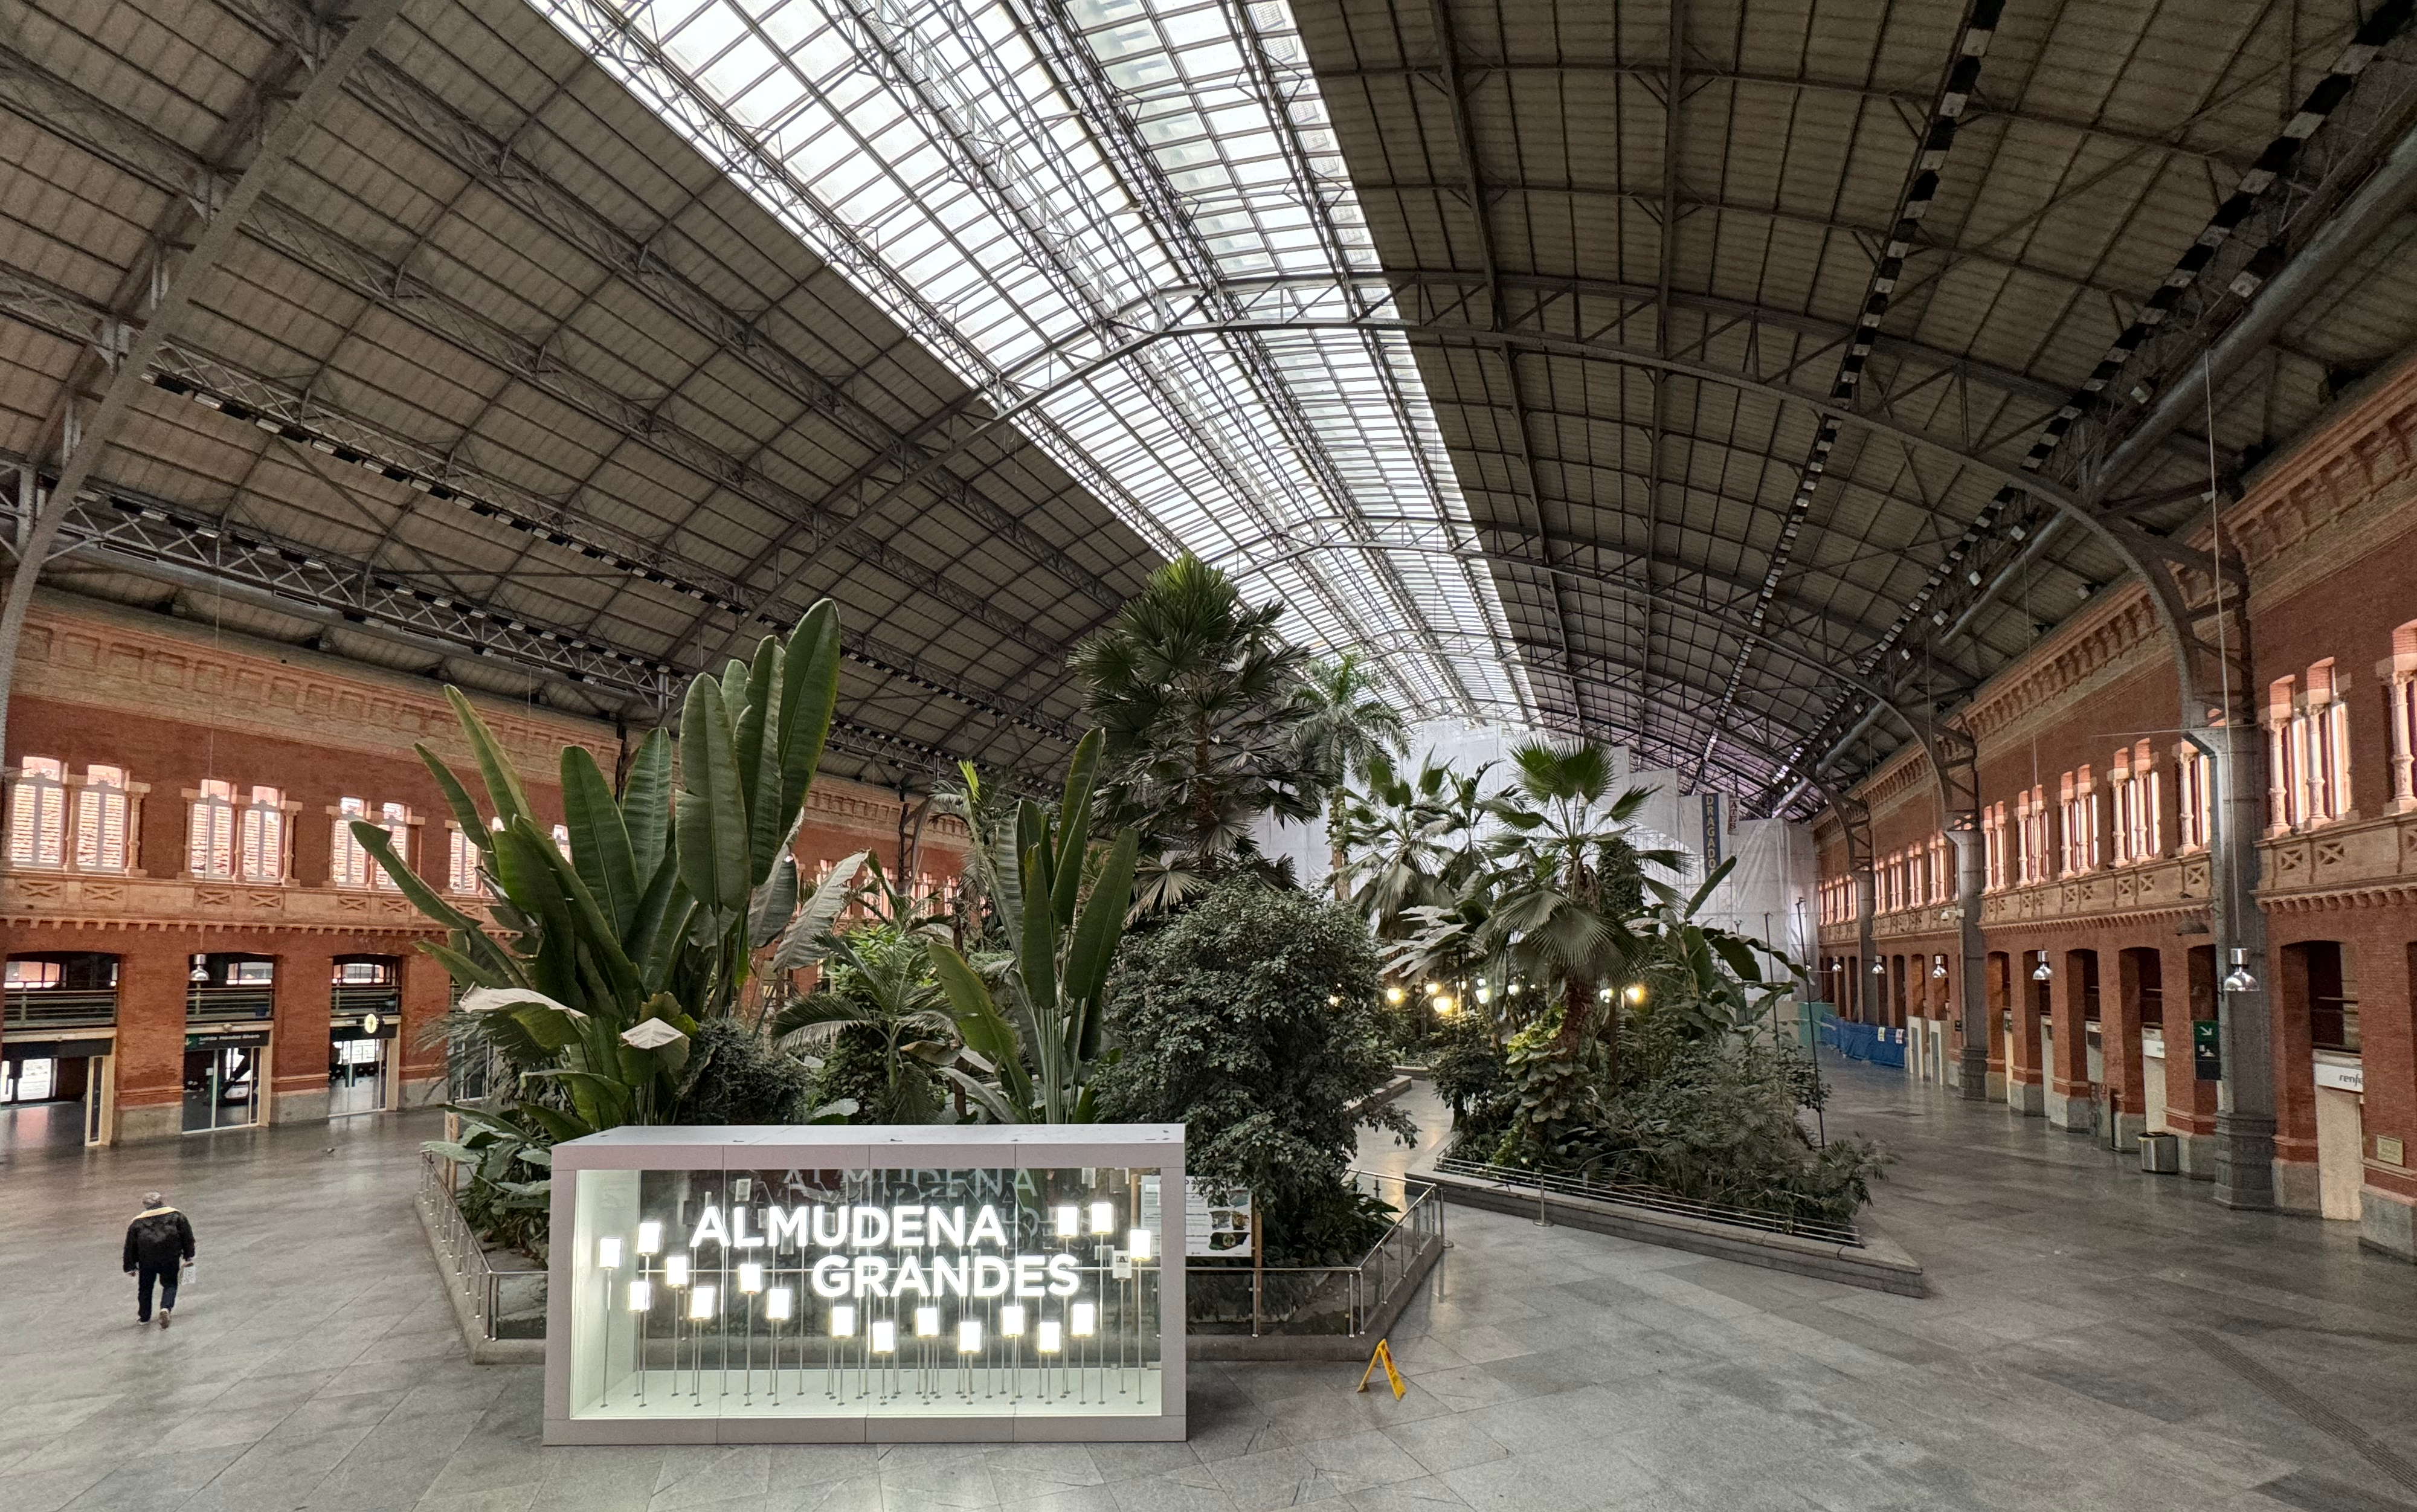 Photo de grandes plantes tropicales dans une gare